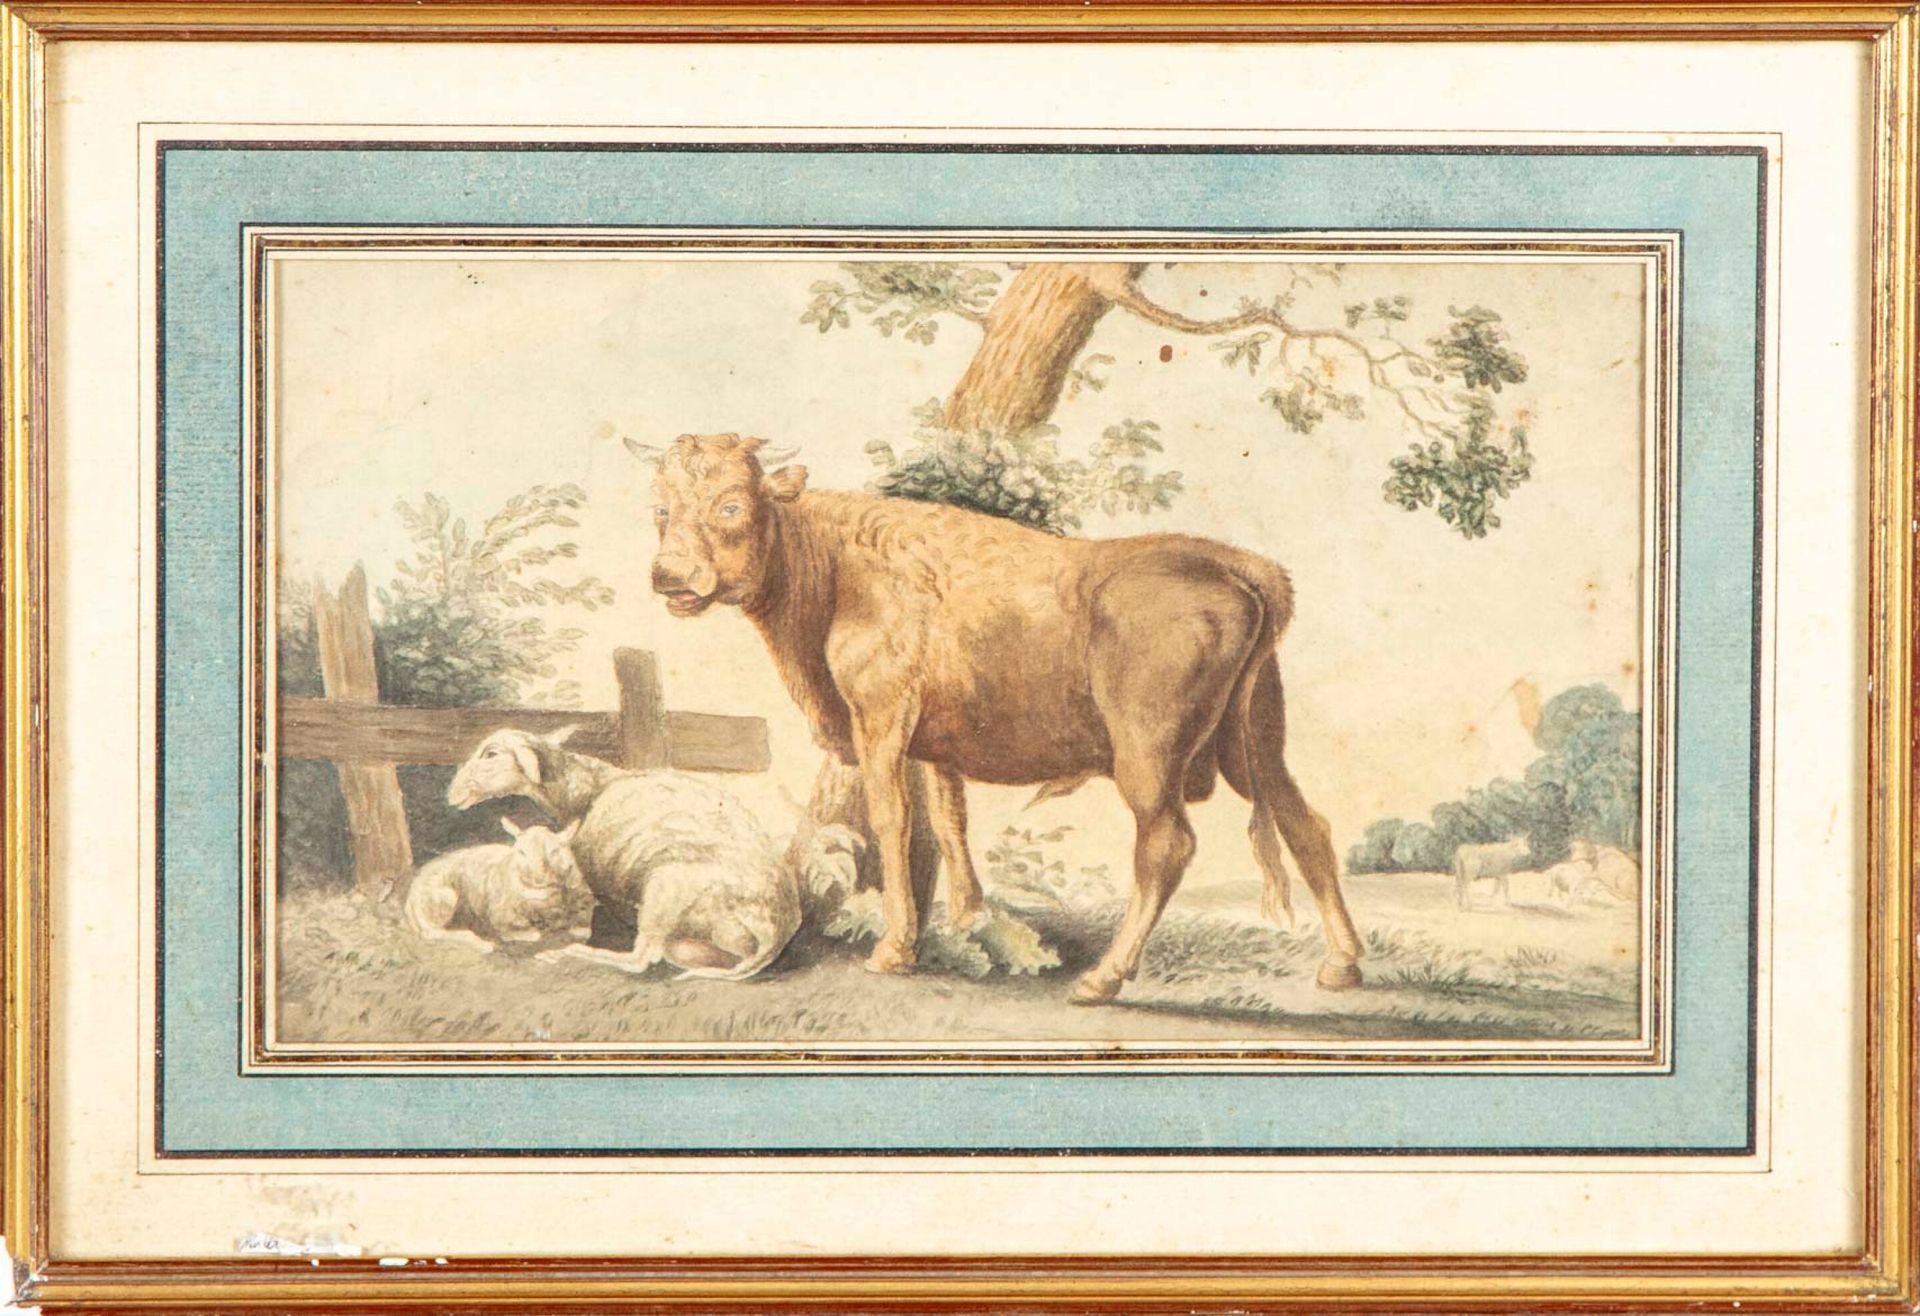 ECOLE HOLLANDAISE XIXe HOLLAND SCHOOL 19世纪初，Paulus Potter的追随者

草地上的牛和羊

水彩画

14.&hellip;